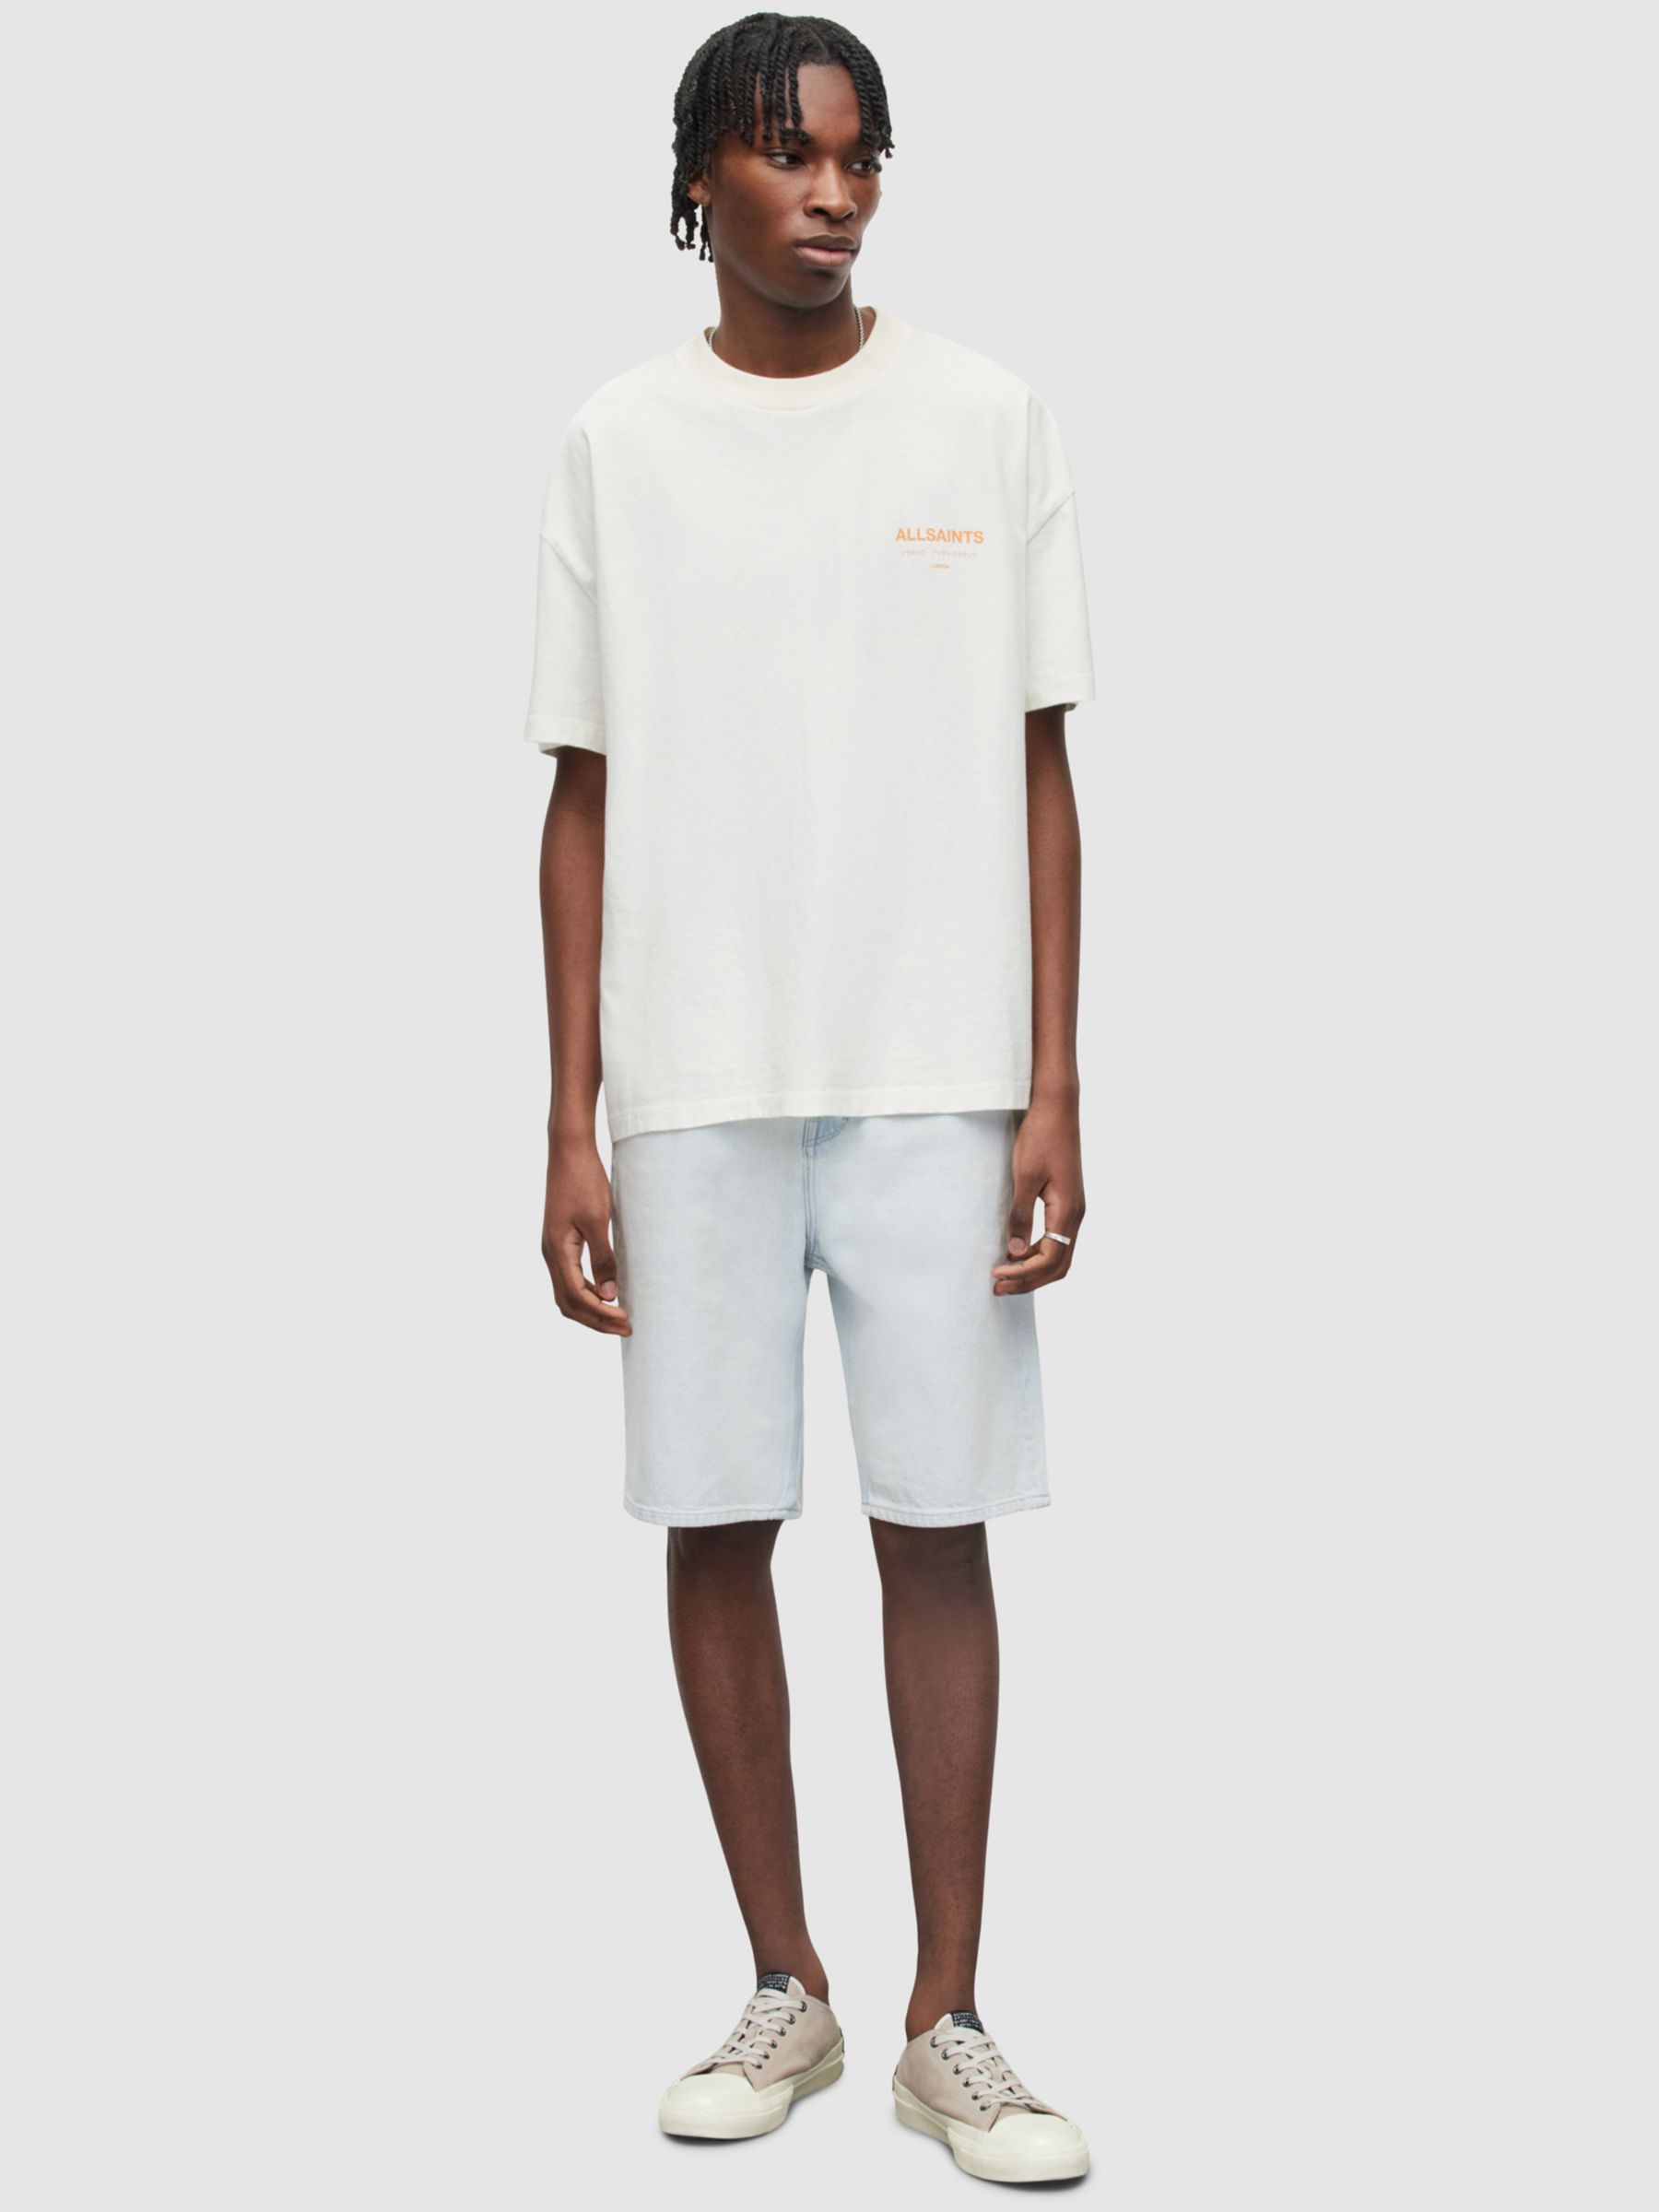 AllSaints Underground T-Shirt, Ashen White/Orange at John Lewis & Partners